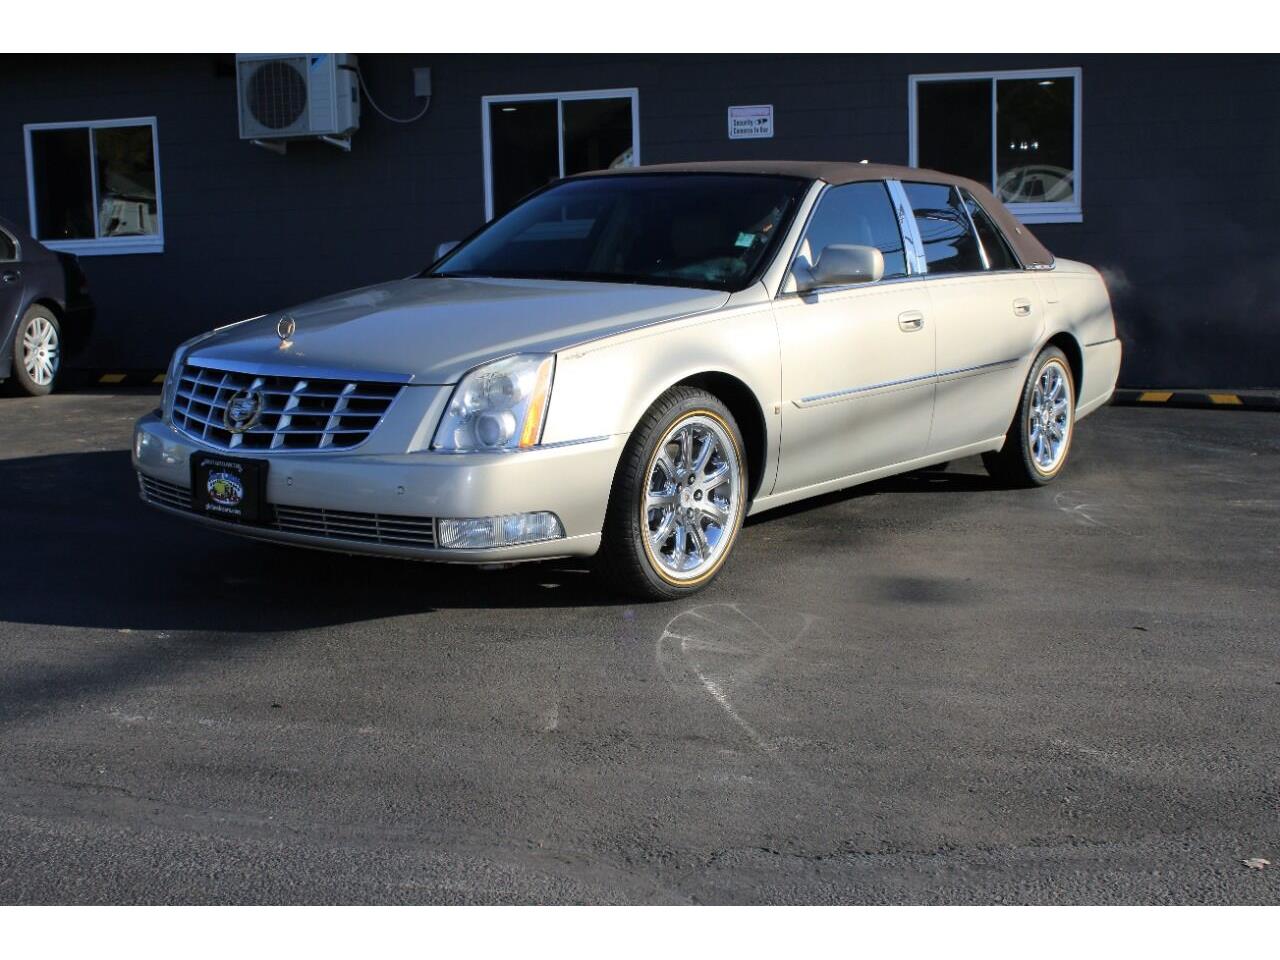 2009 Cadillac DTS for Sale | ClassicCars.com | CC-1417998